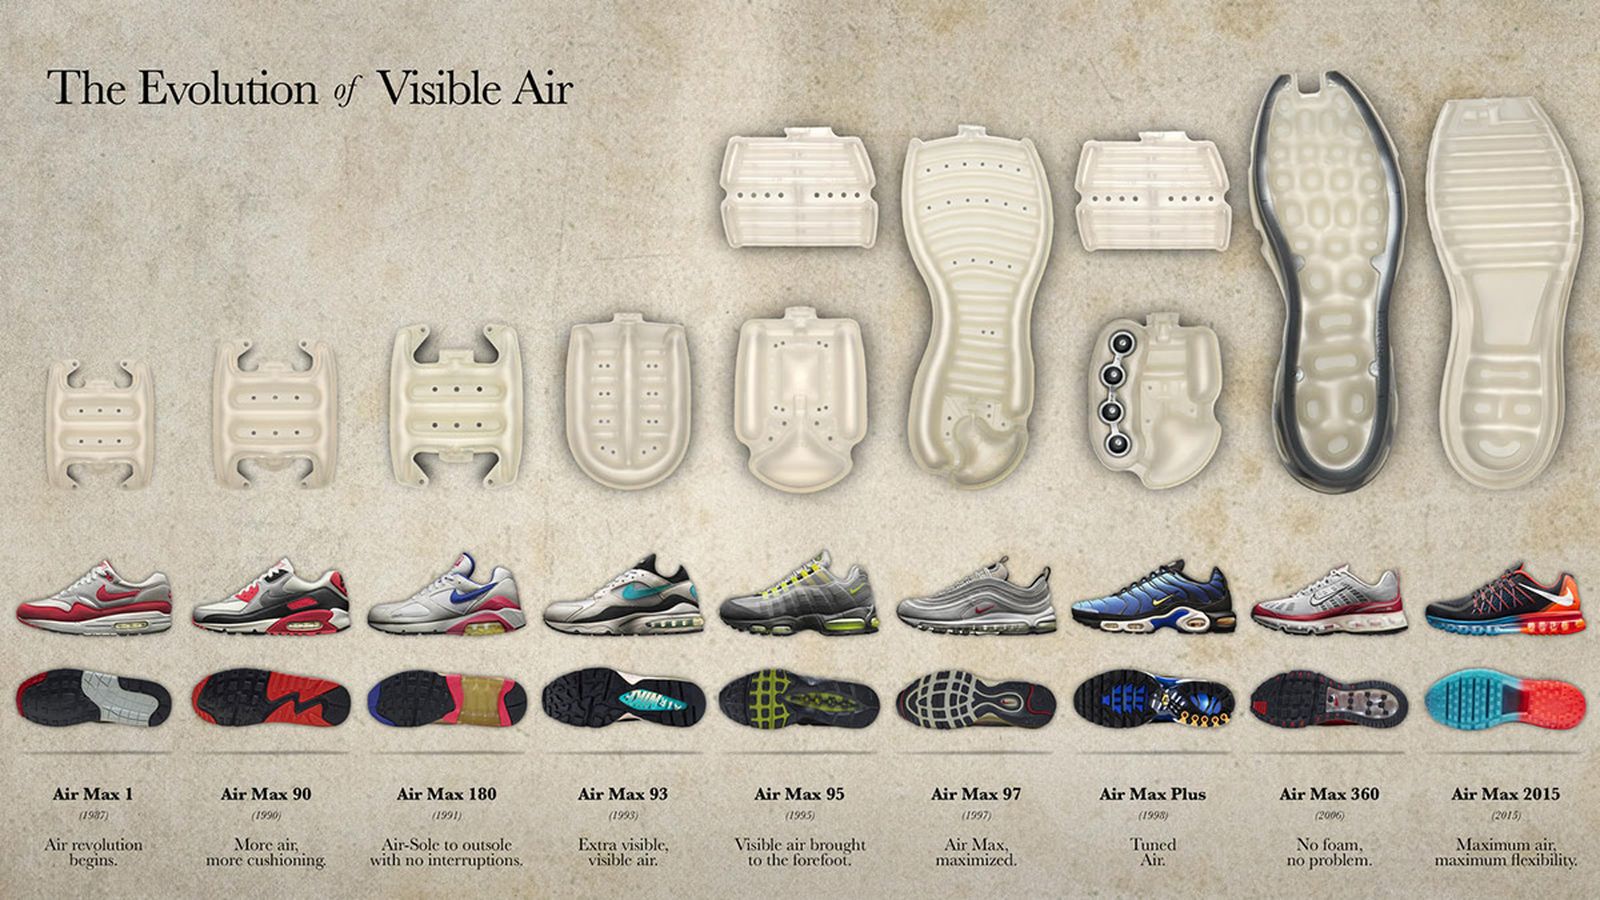 Inapropiado Aprovechar perturbación Nike Air Max 1: The Story Behind the Revolutionary Sneaker